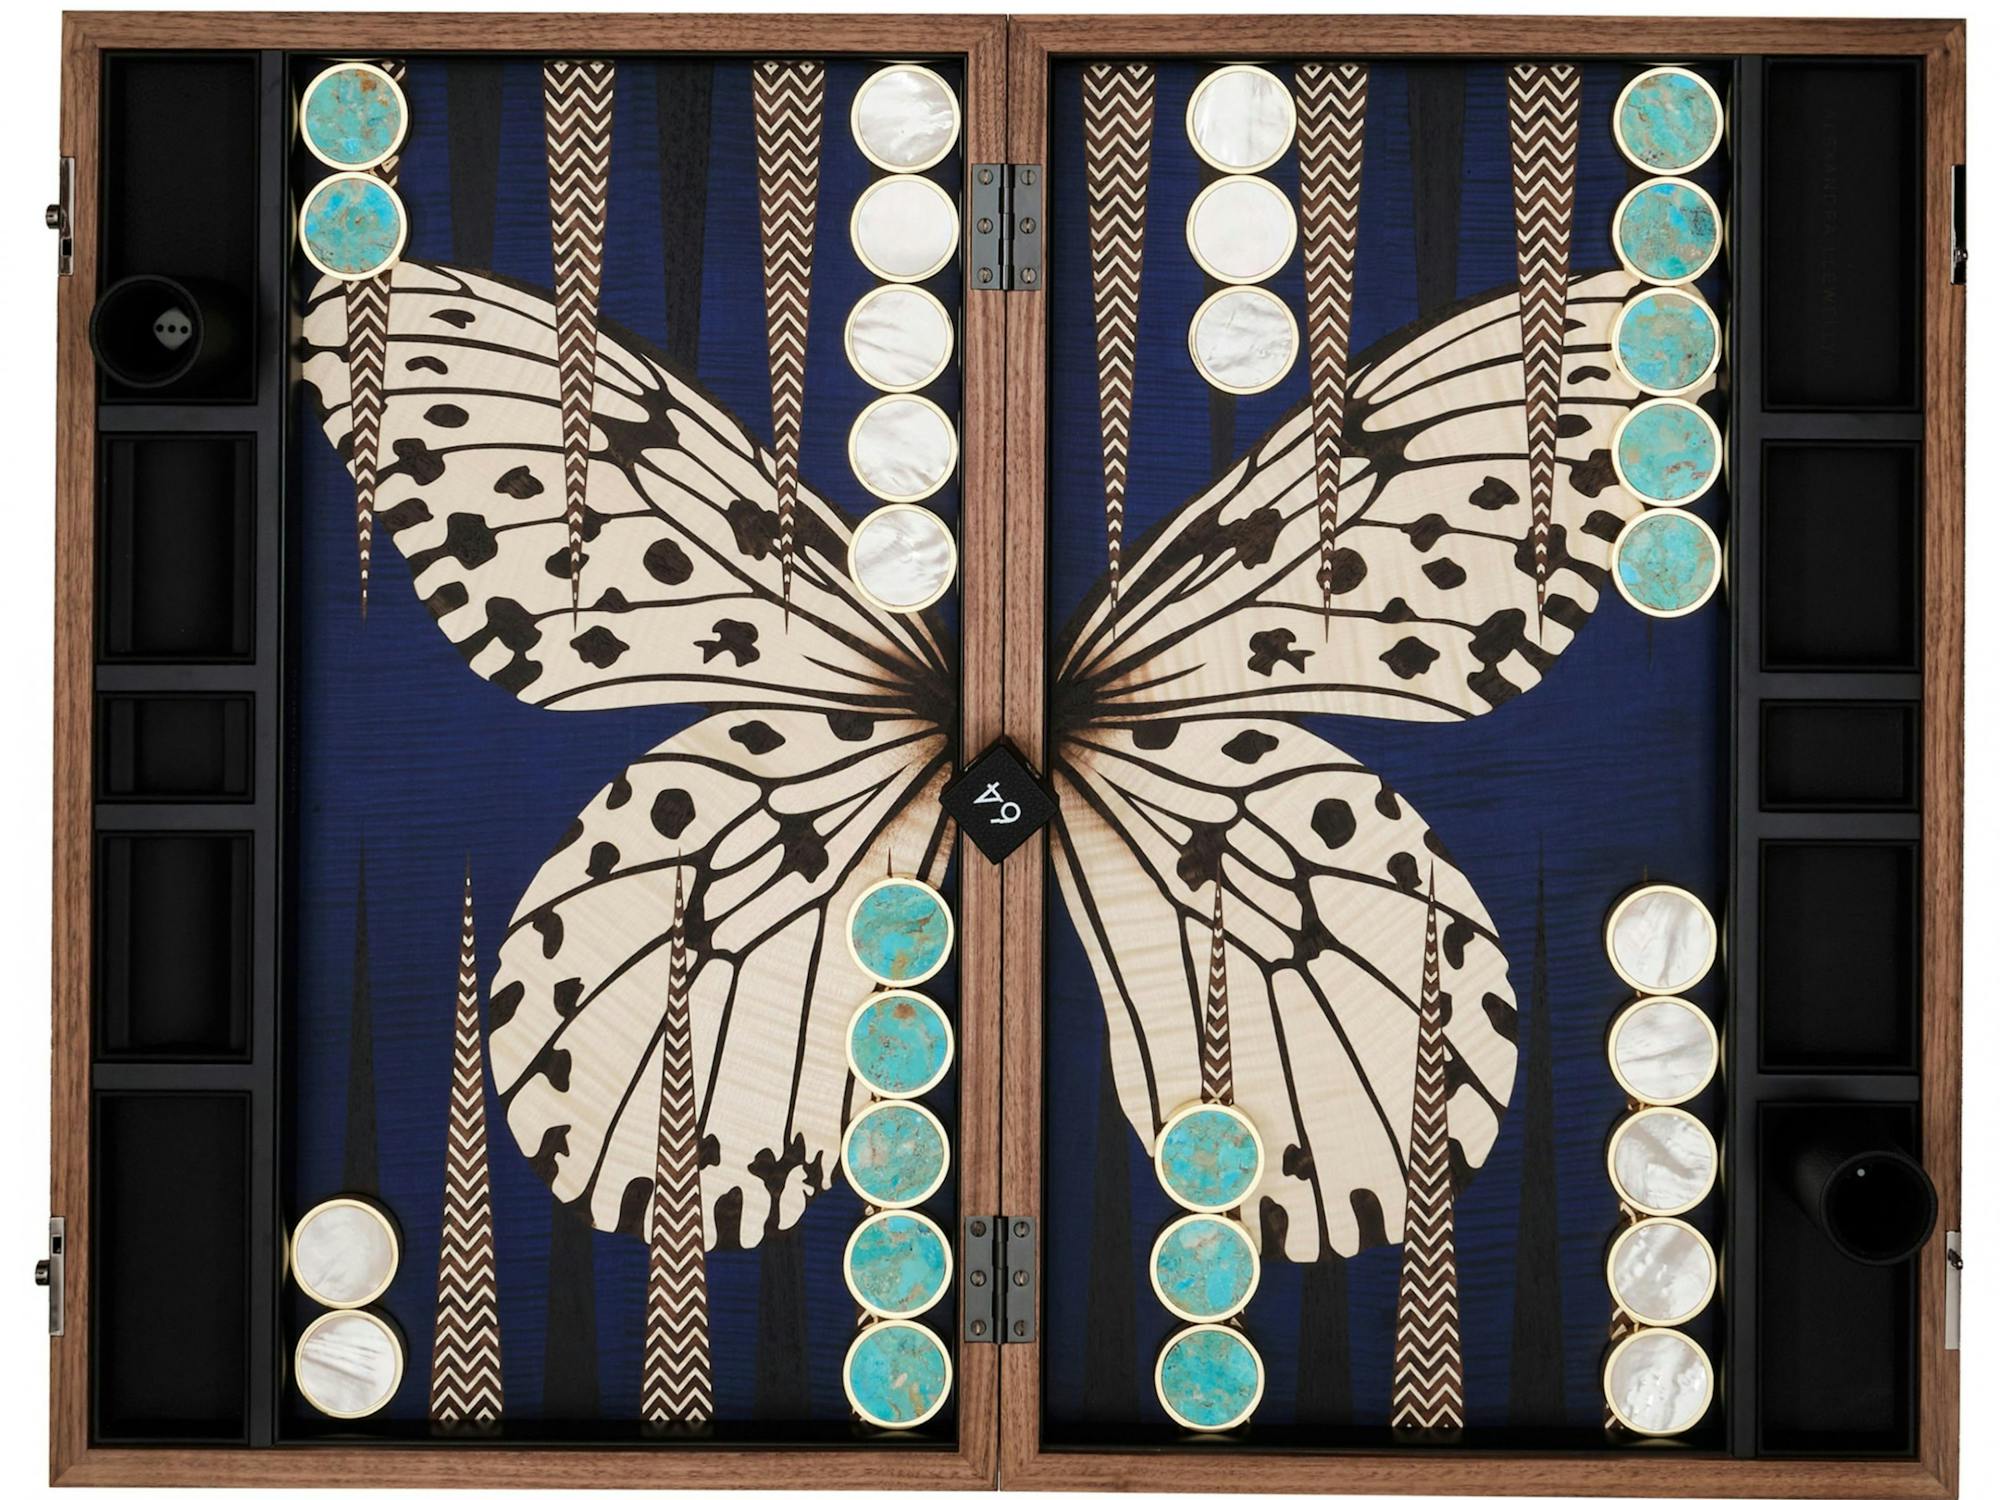 https://walpole.imgix.net/news_images/walpole-collaboration-alexandra-llewellyn-x-net-a-porter-create-an-enchanting-butterfly-themed-collectionsHcV8.jpg?w=2000&auto=format,ehance,compress